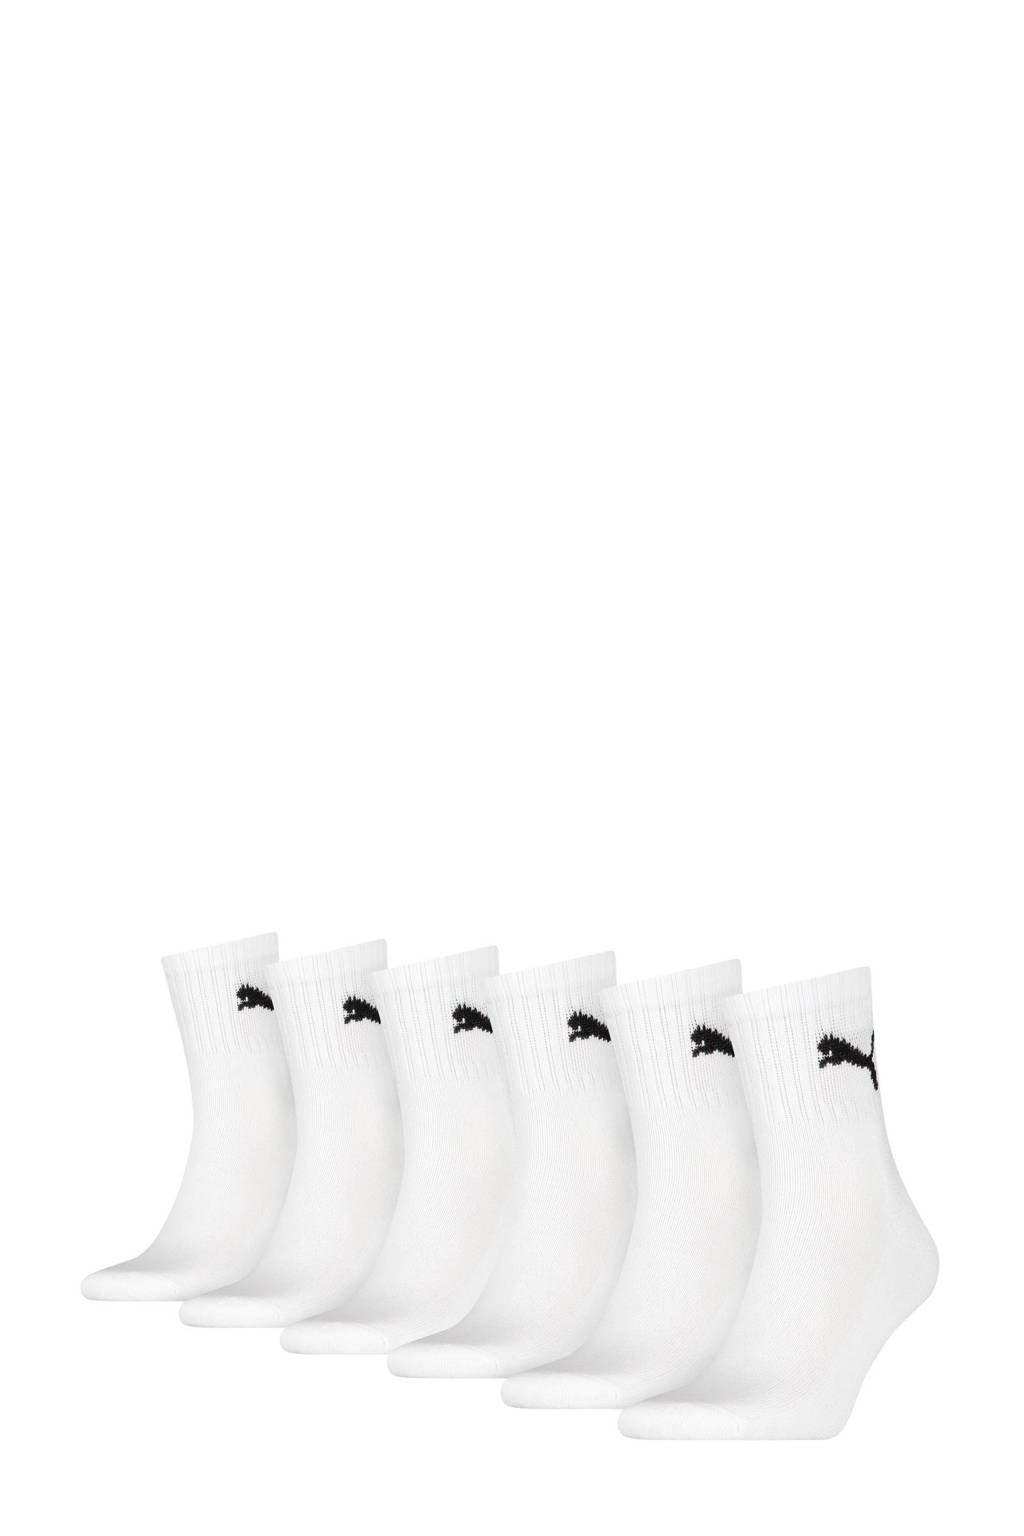 Puma sokken - set van 6 wit, Wit